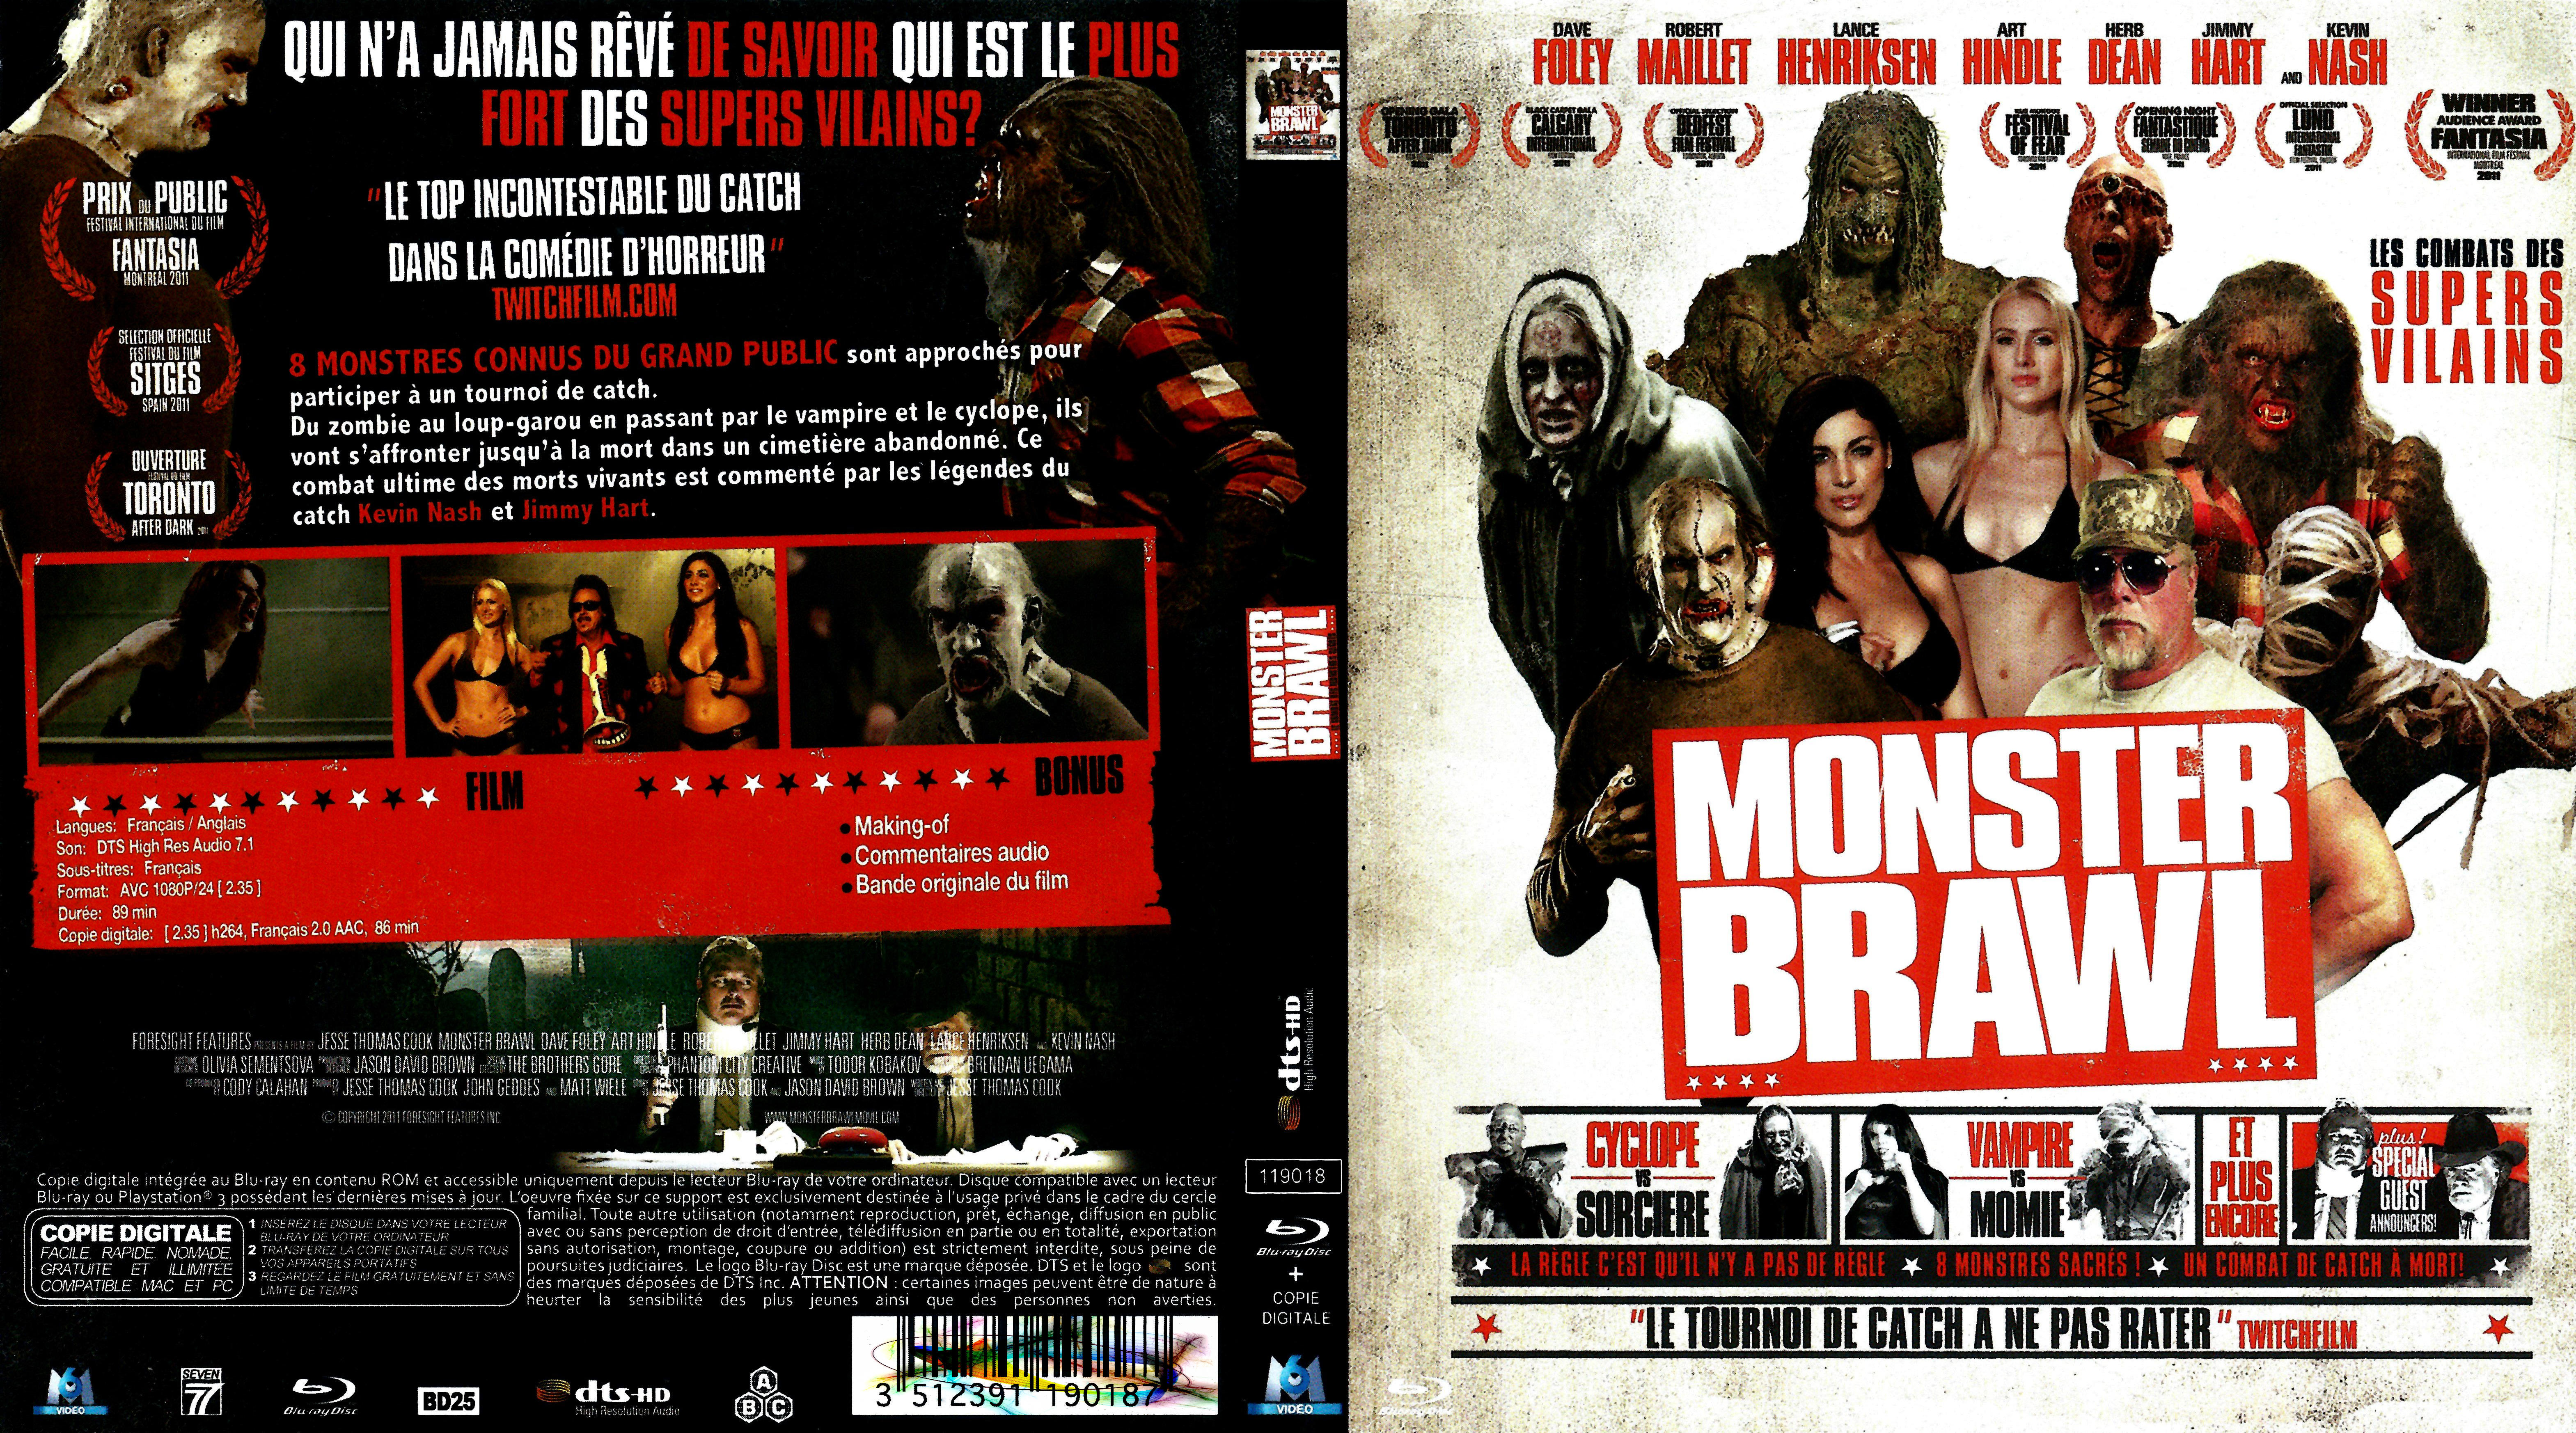 Jaquette DVD Monster brawl (BLU-RAY)